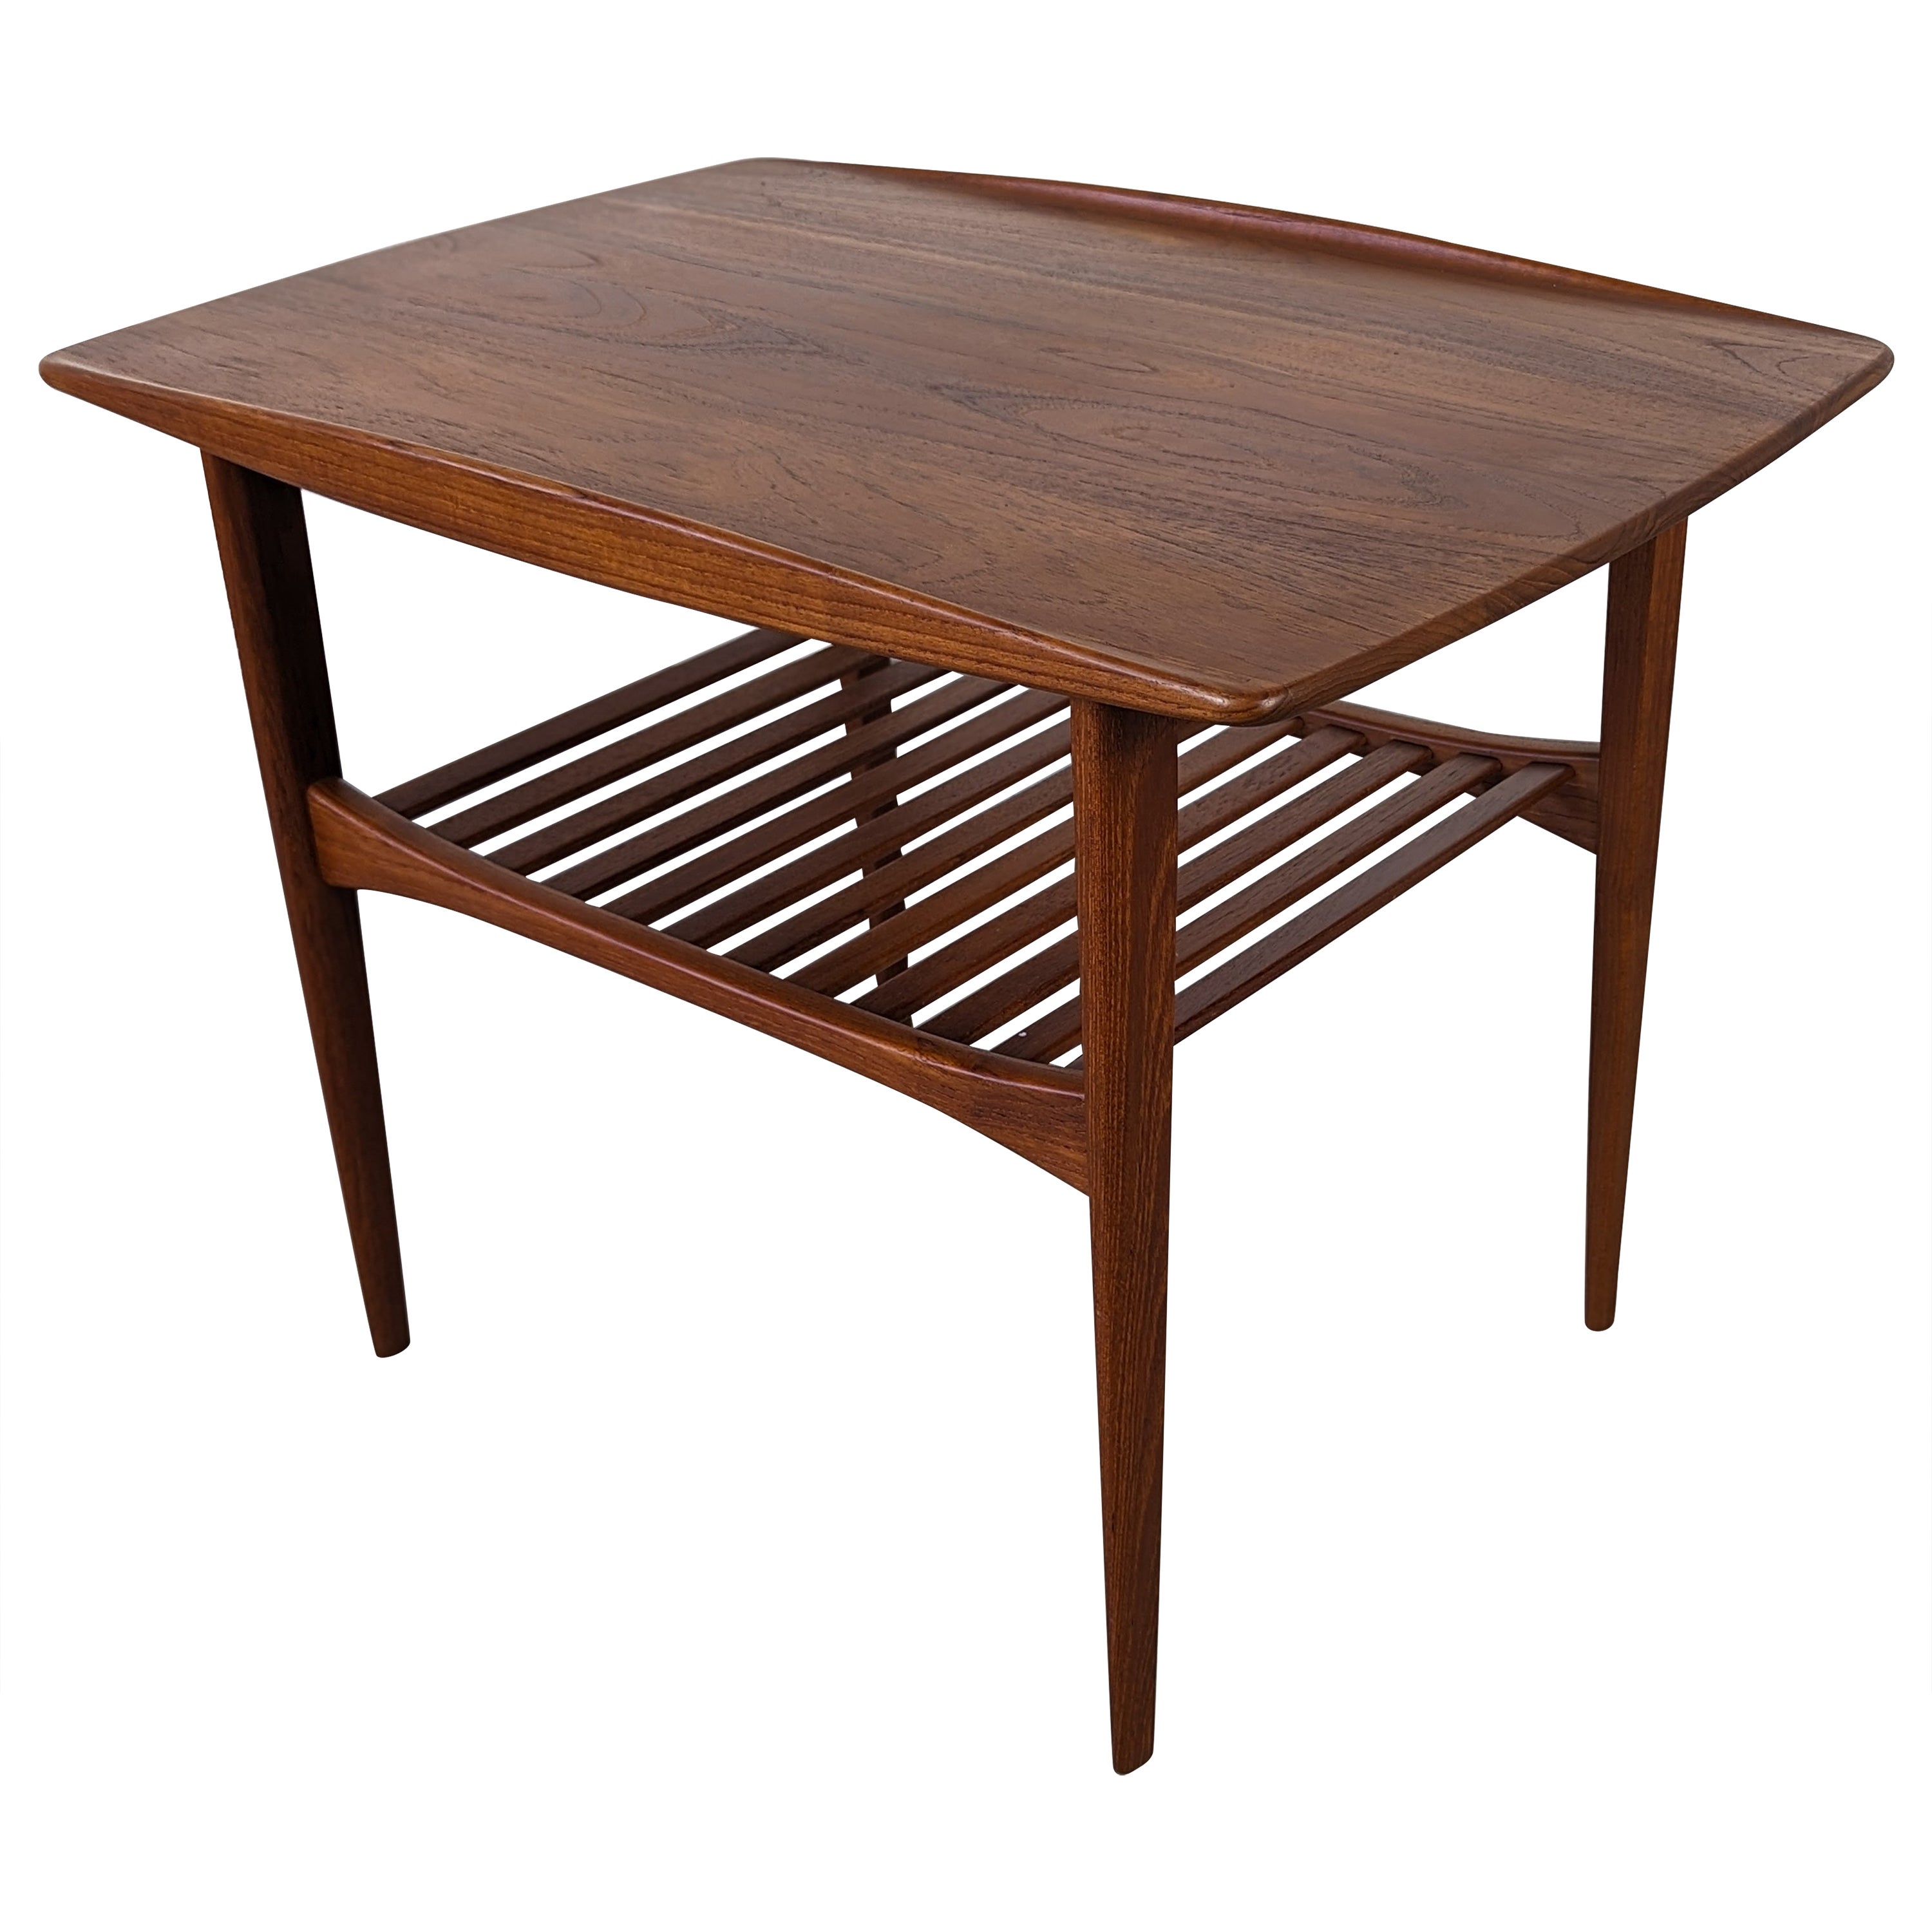 Danish Solid Teak Mid Century Side Table by Finn Juhl for France & Søn, c1950s For Sale